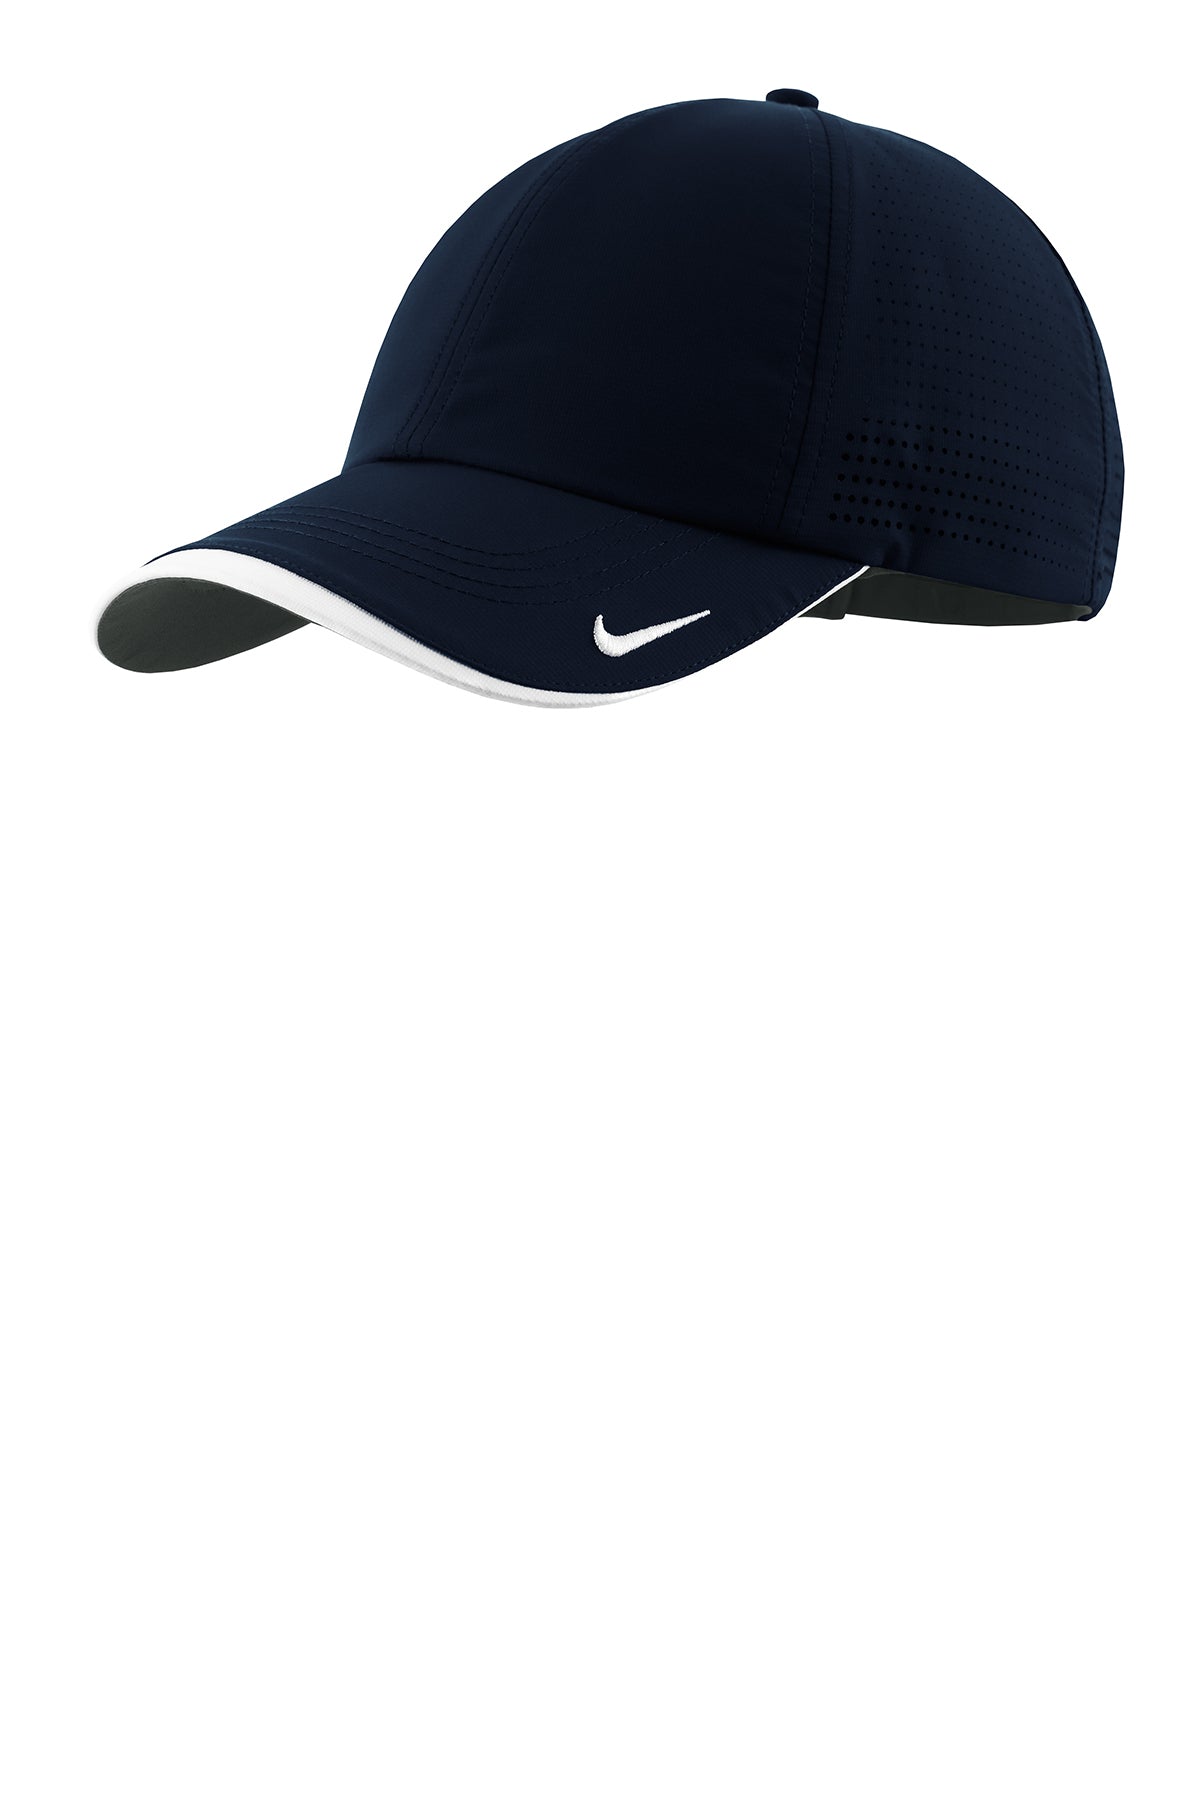 Nike Dri-FIT Swoosh Perforated Customized Caps, Navy